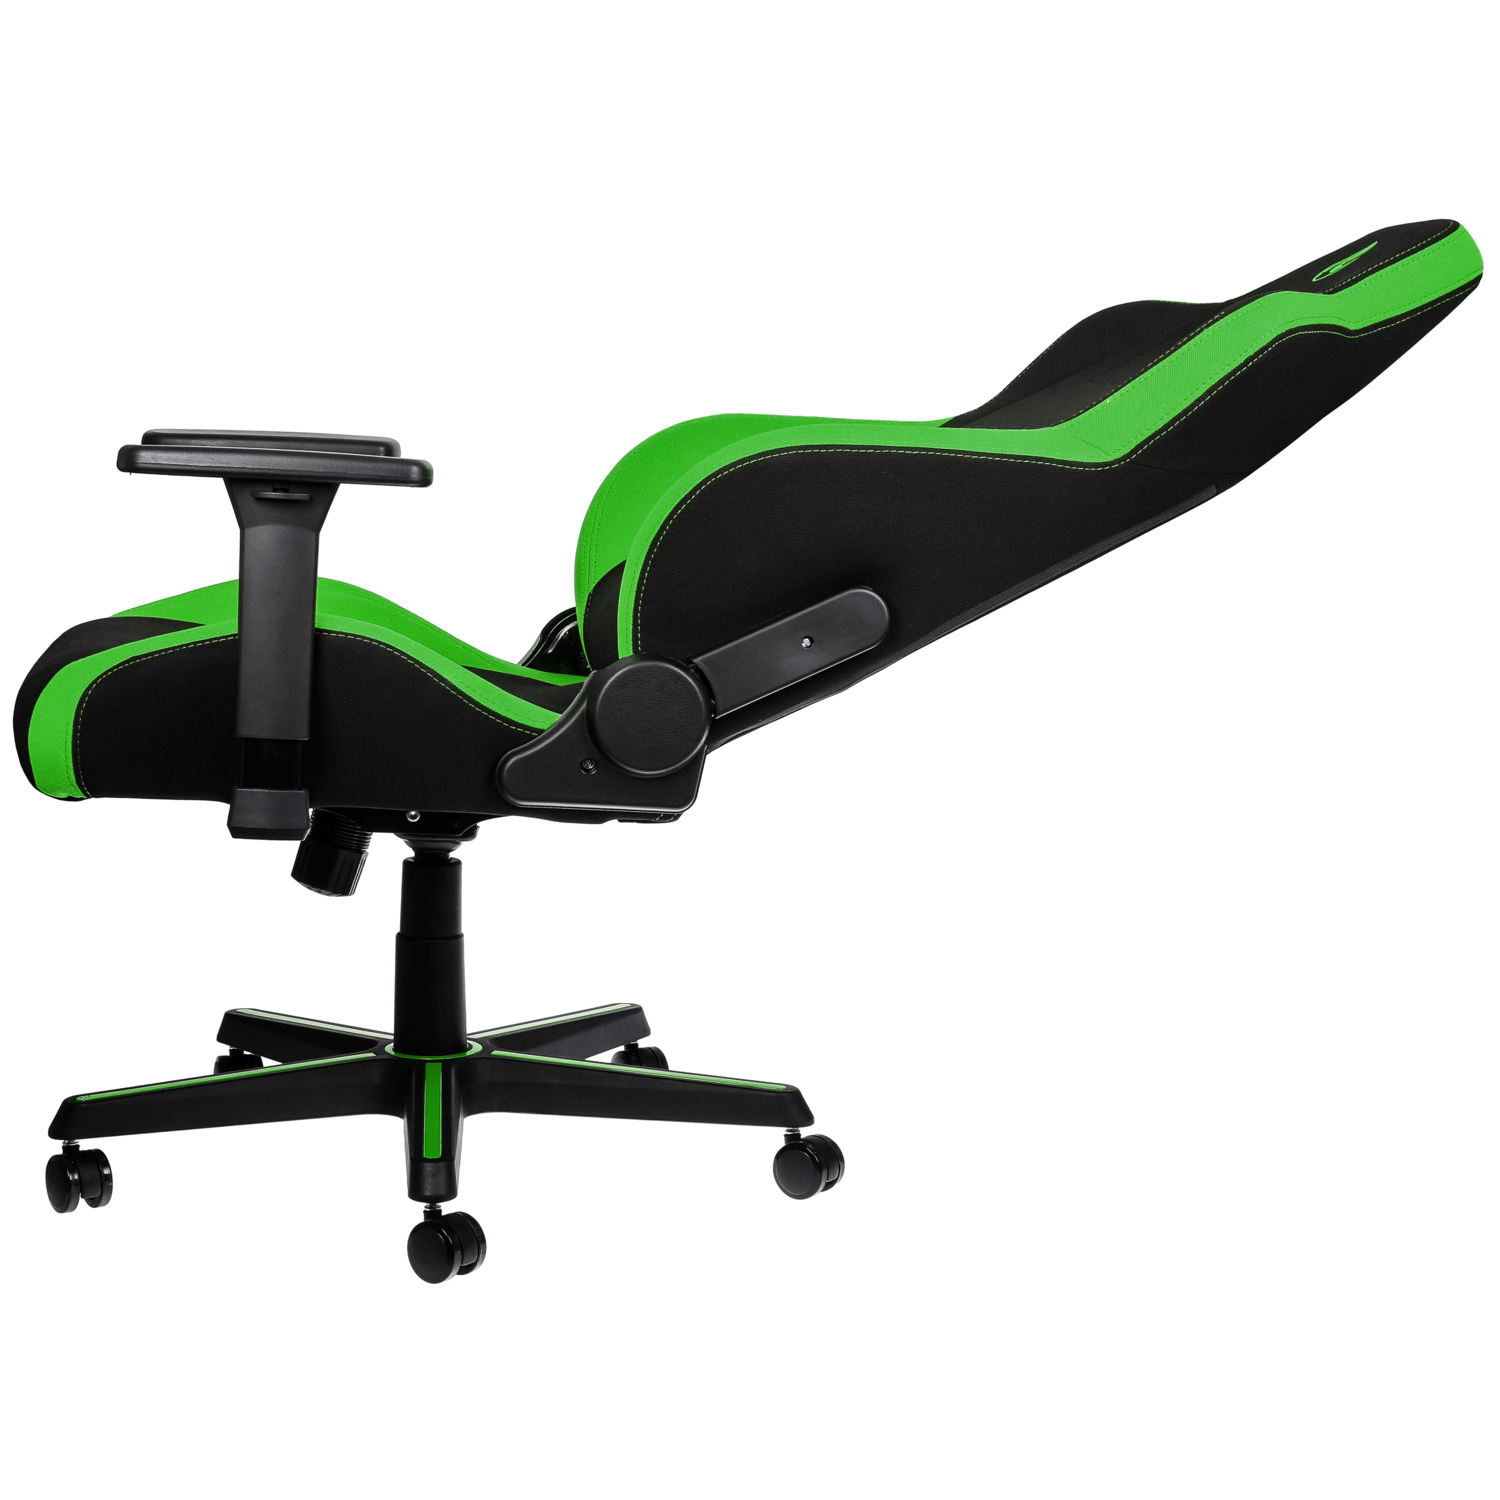 S300 Gaming Chair Atomic Green